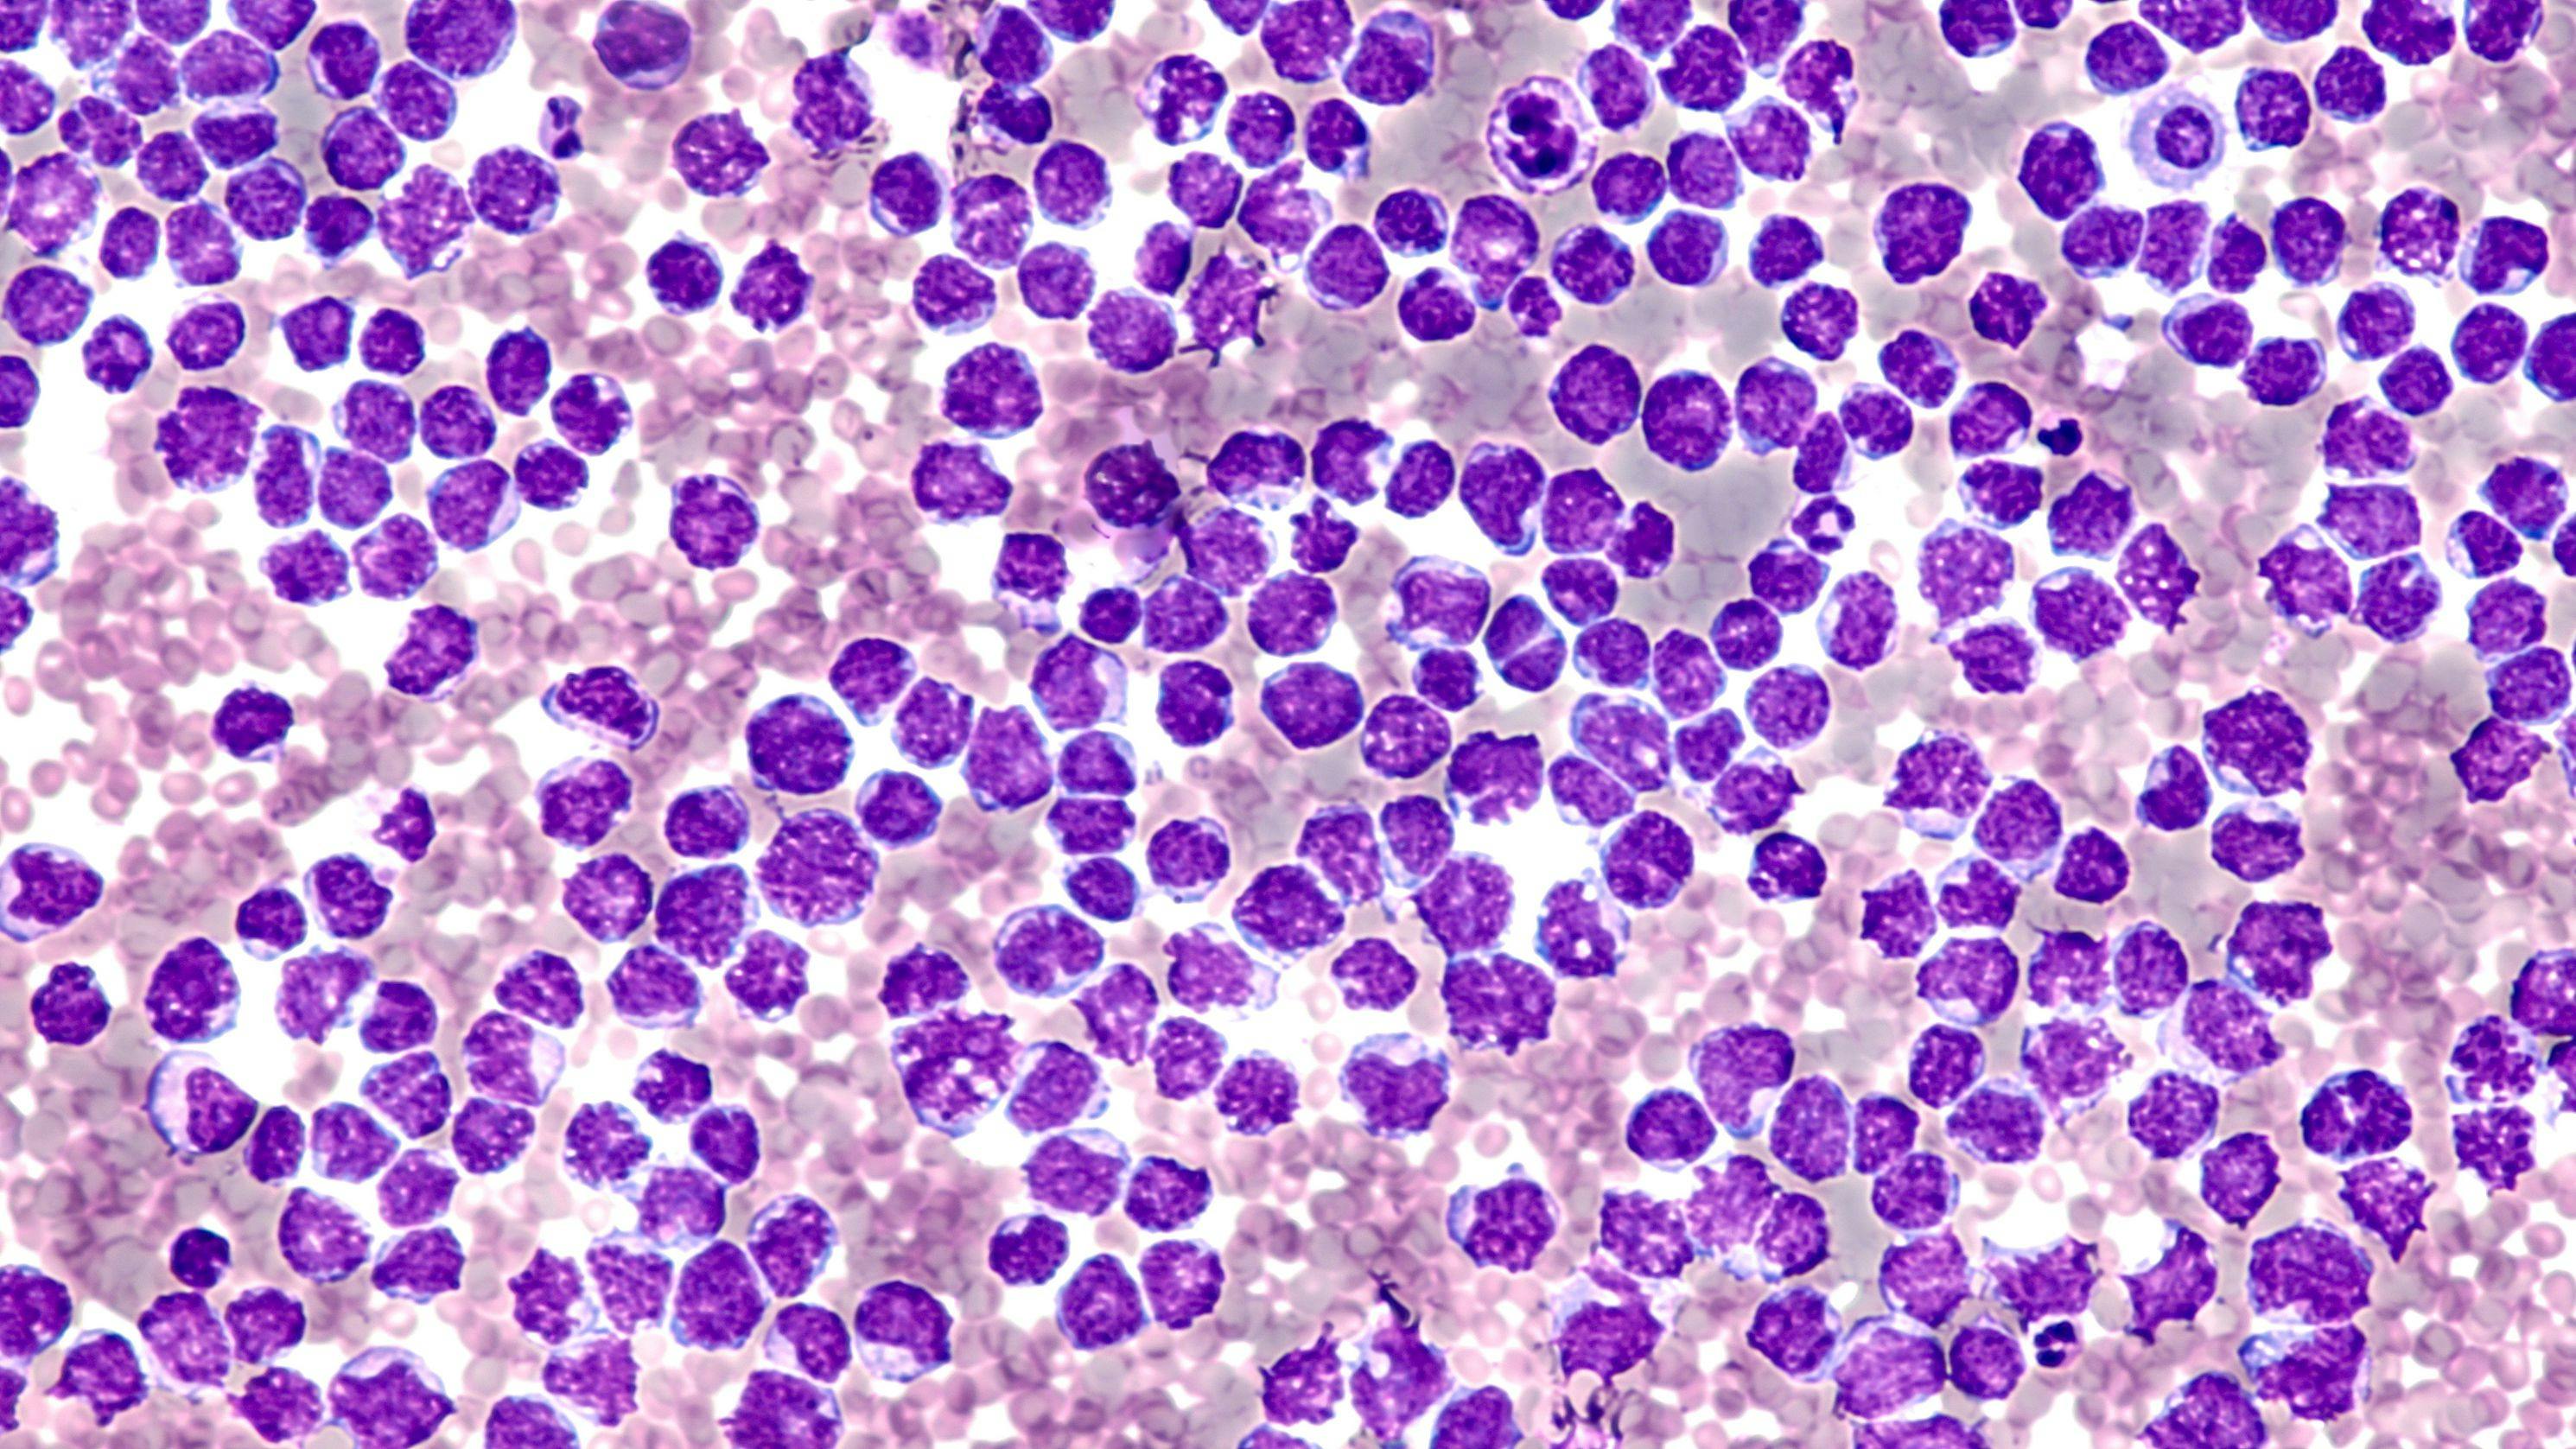 Mantle cell lymphoma -- Image credit: David A Litman | stock.adobe.com